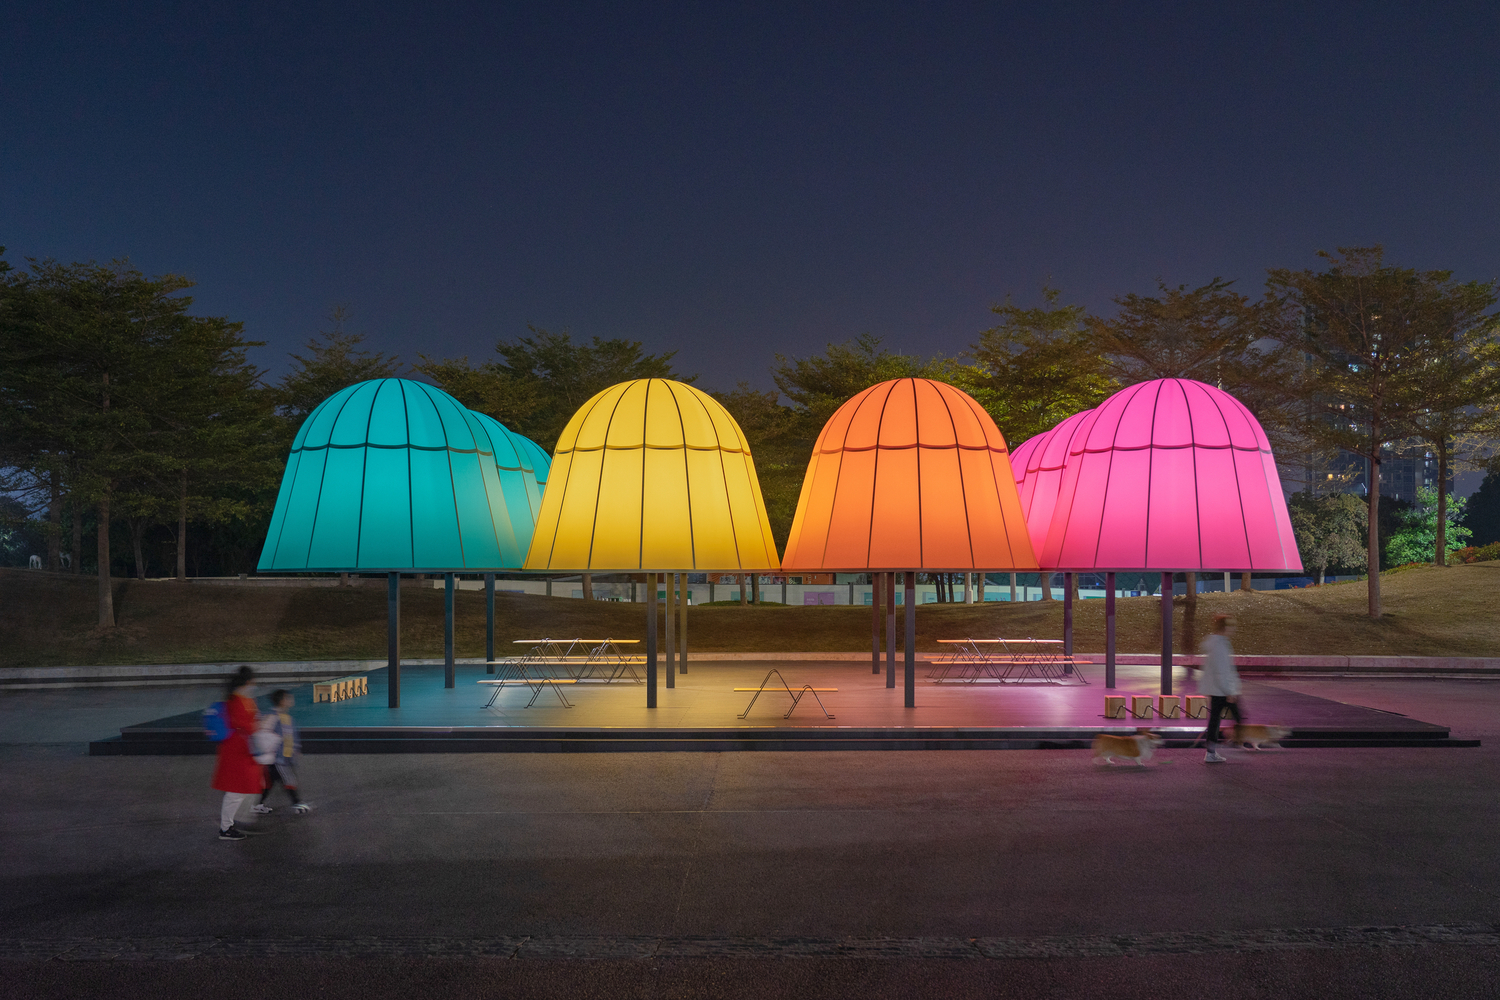 Dream Glow Pavillion: Colorful “Mushrooms” at the Shenzhen Light Festival